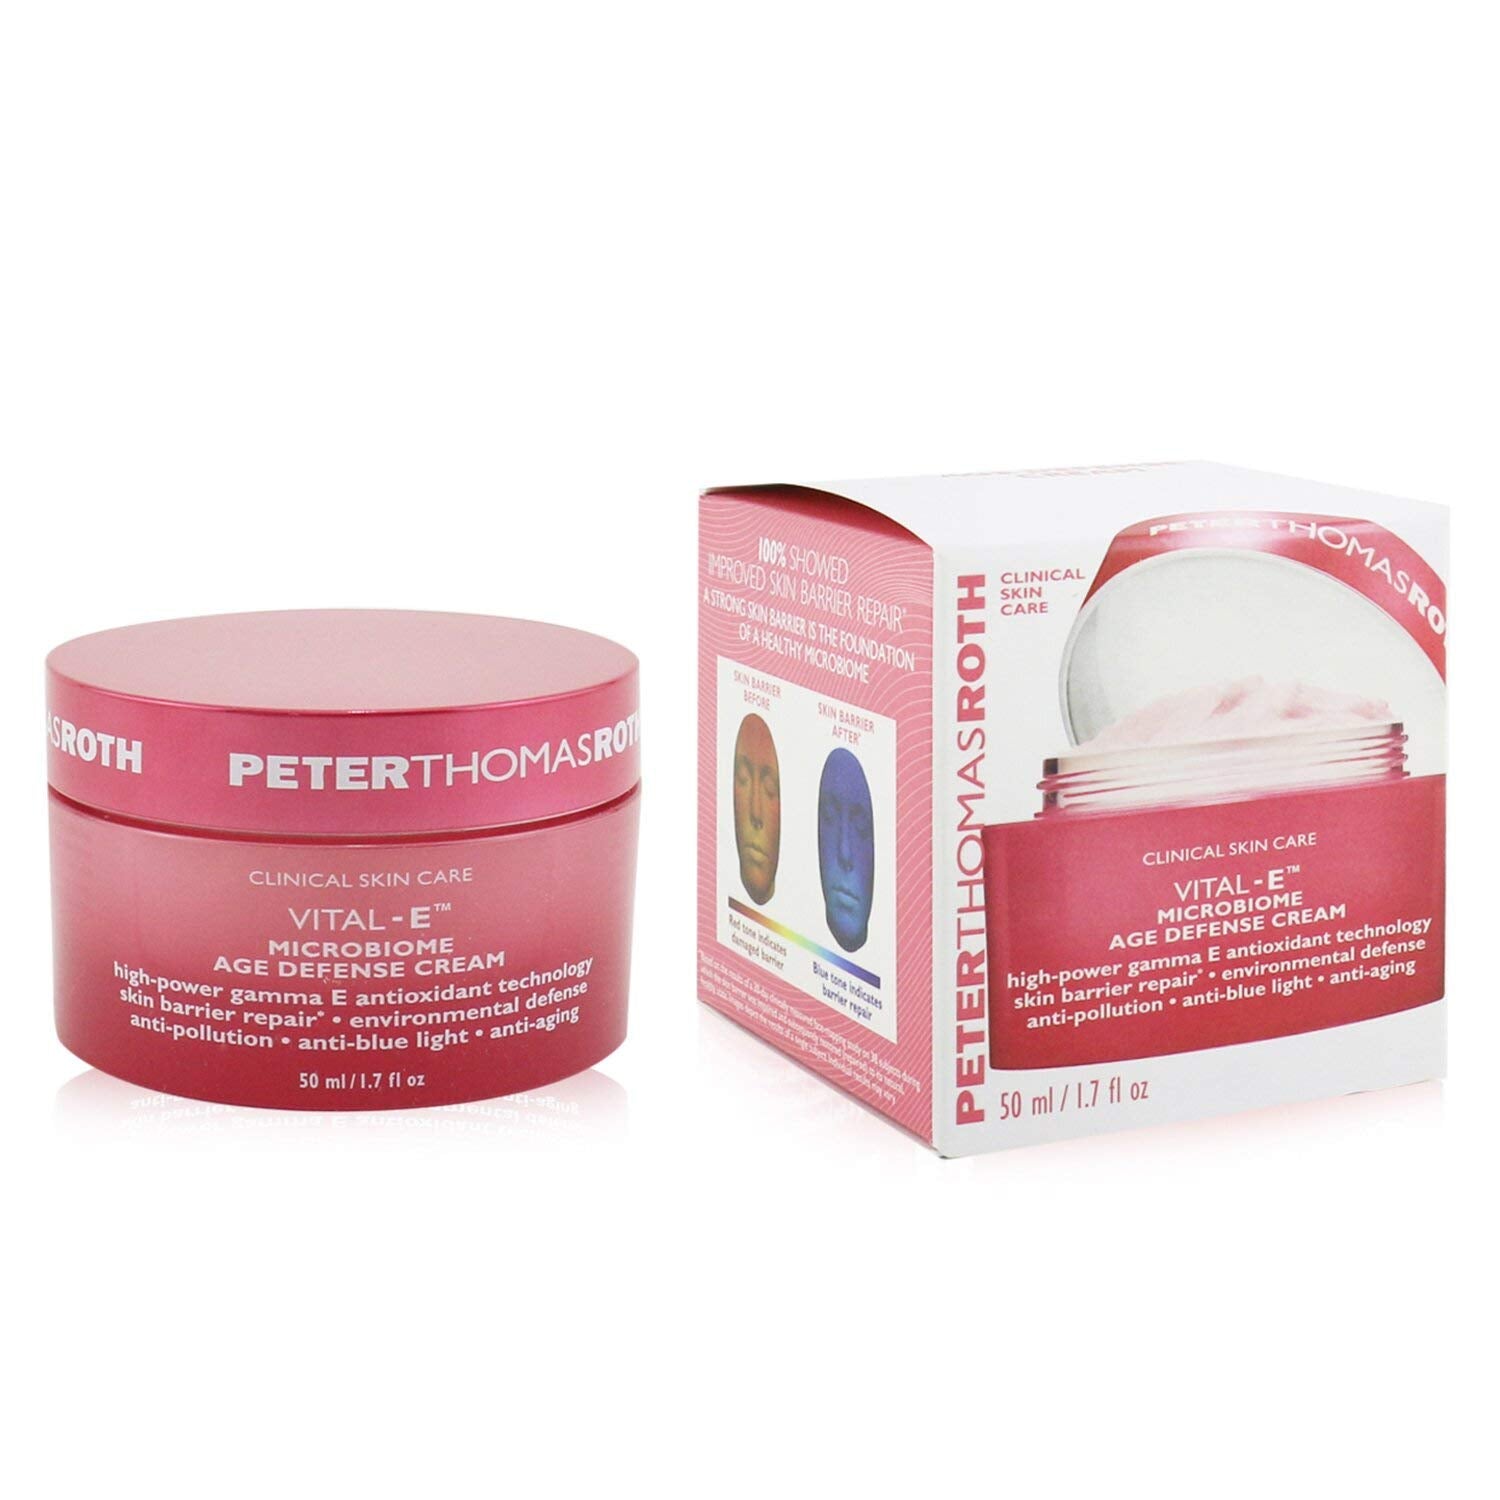 Peter Thomas Roth Vital-E Microbiome Age Defense Cream 1.7 oz / 50 ml P1